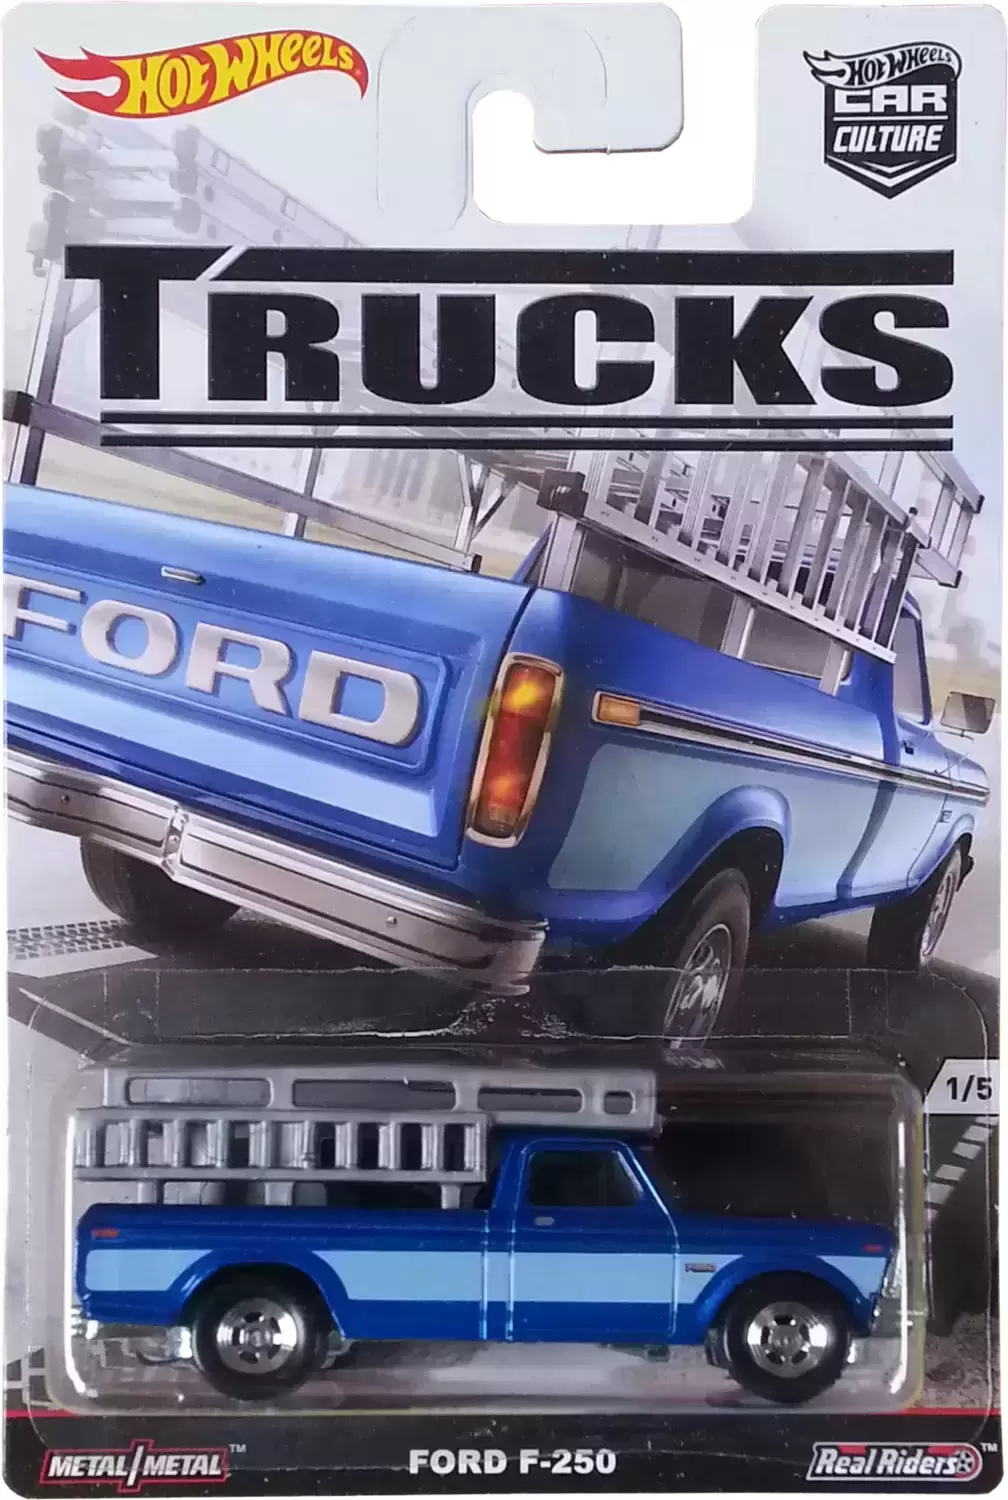 Hot Wheels - Car Culture - Trucks - Ford F-250